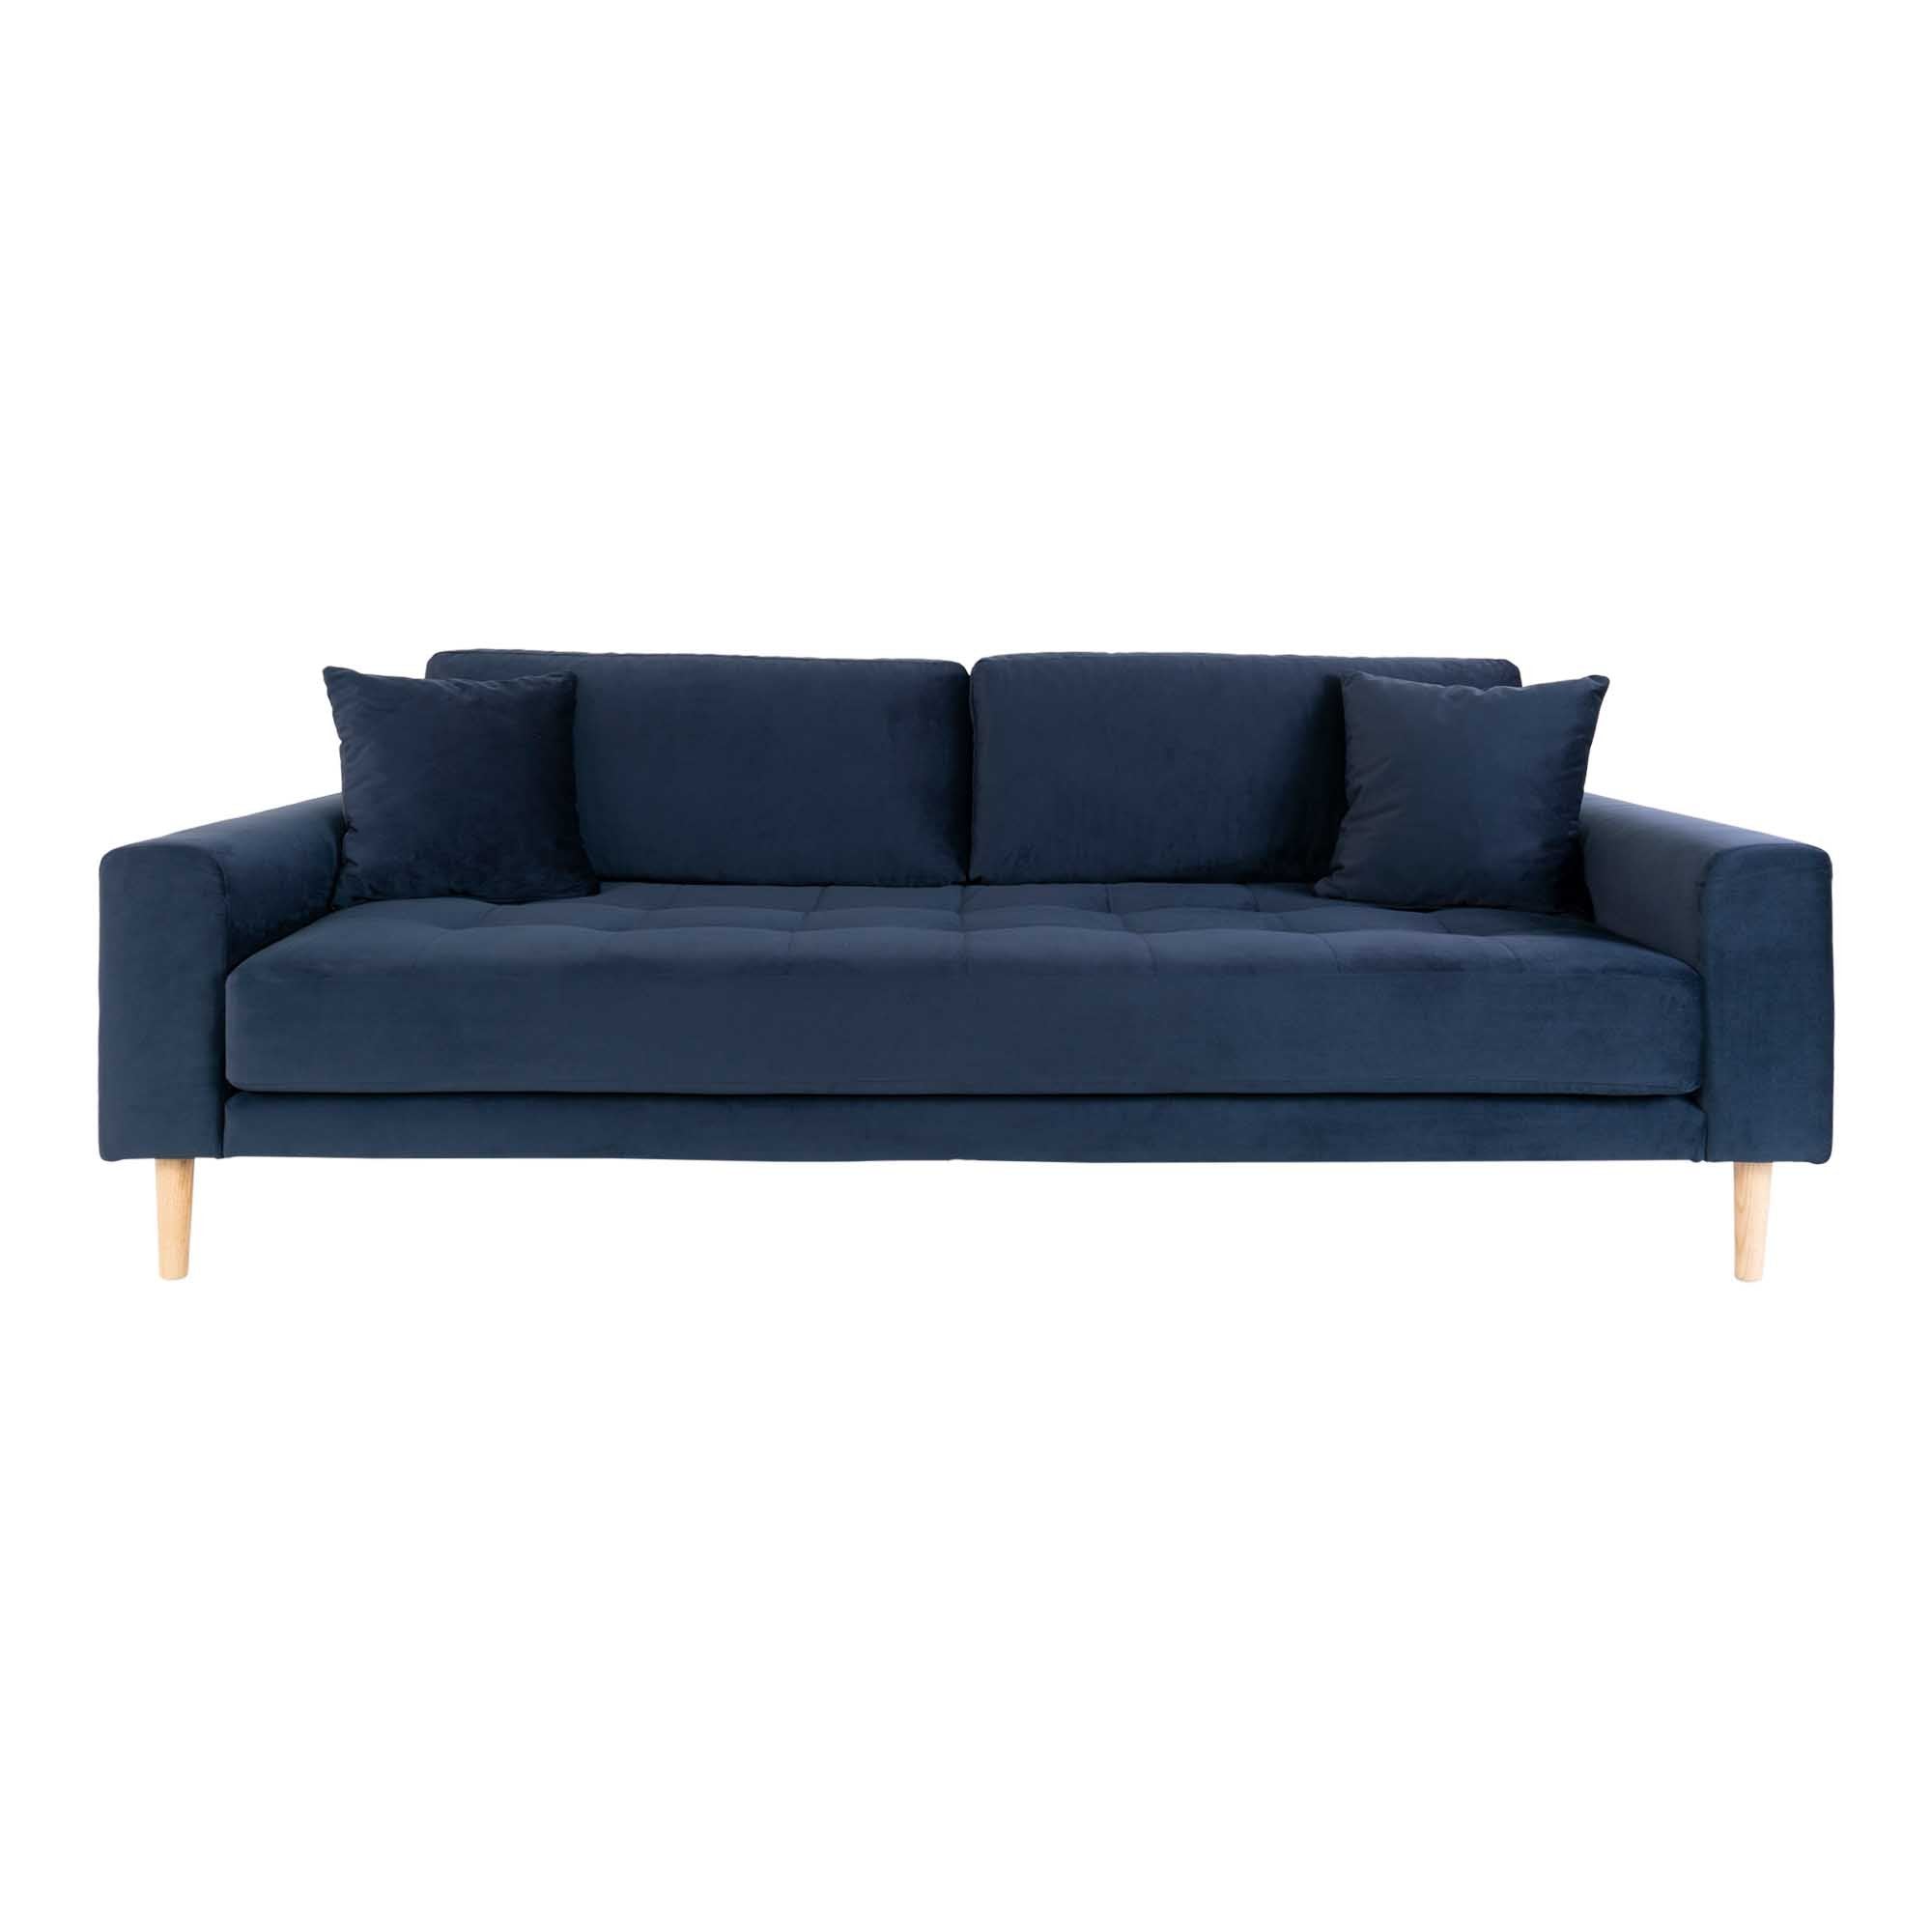 Canapea cu 3 locuri Lido 210x76x93 cm